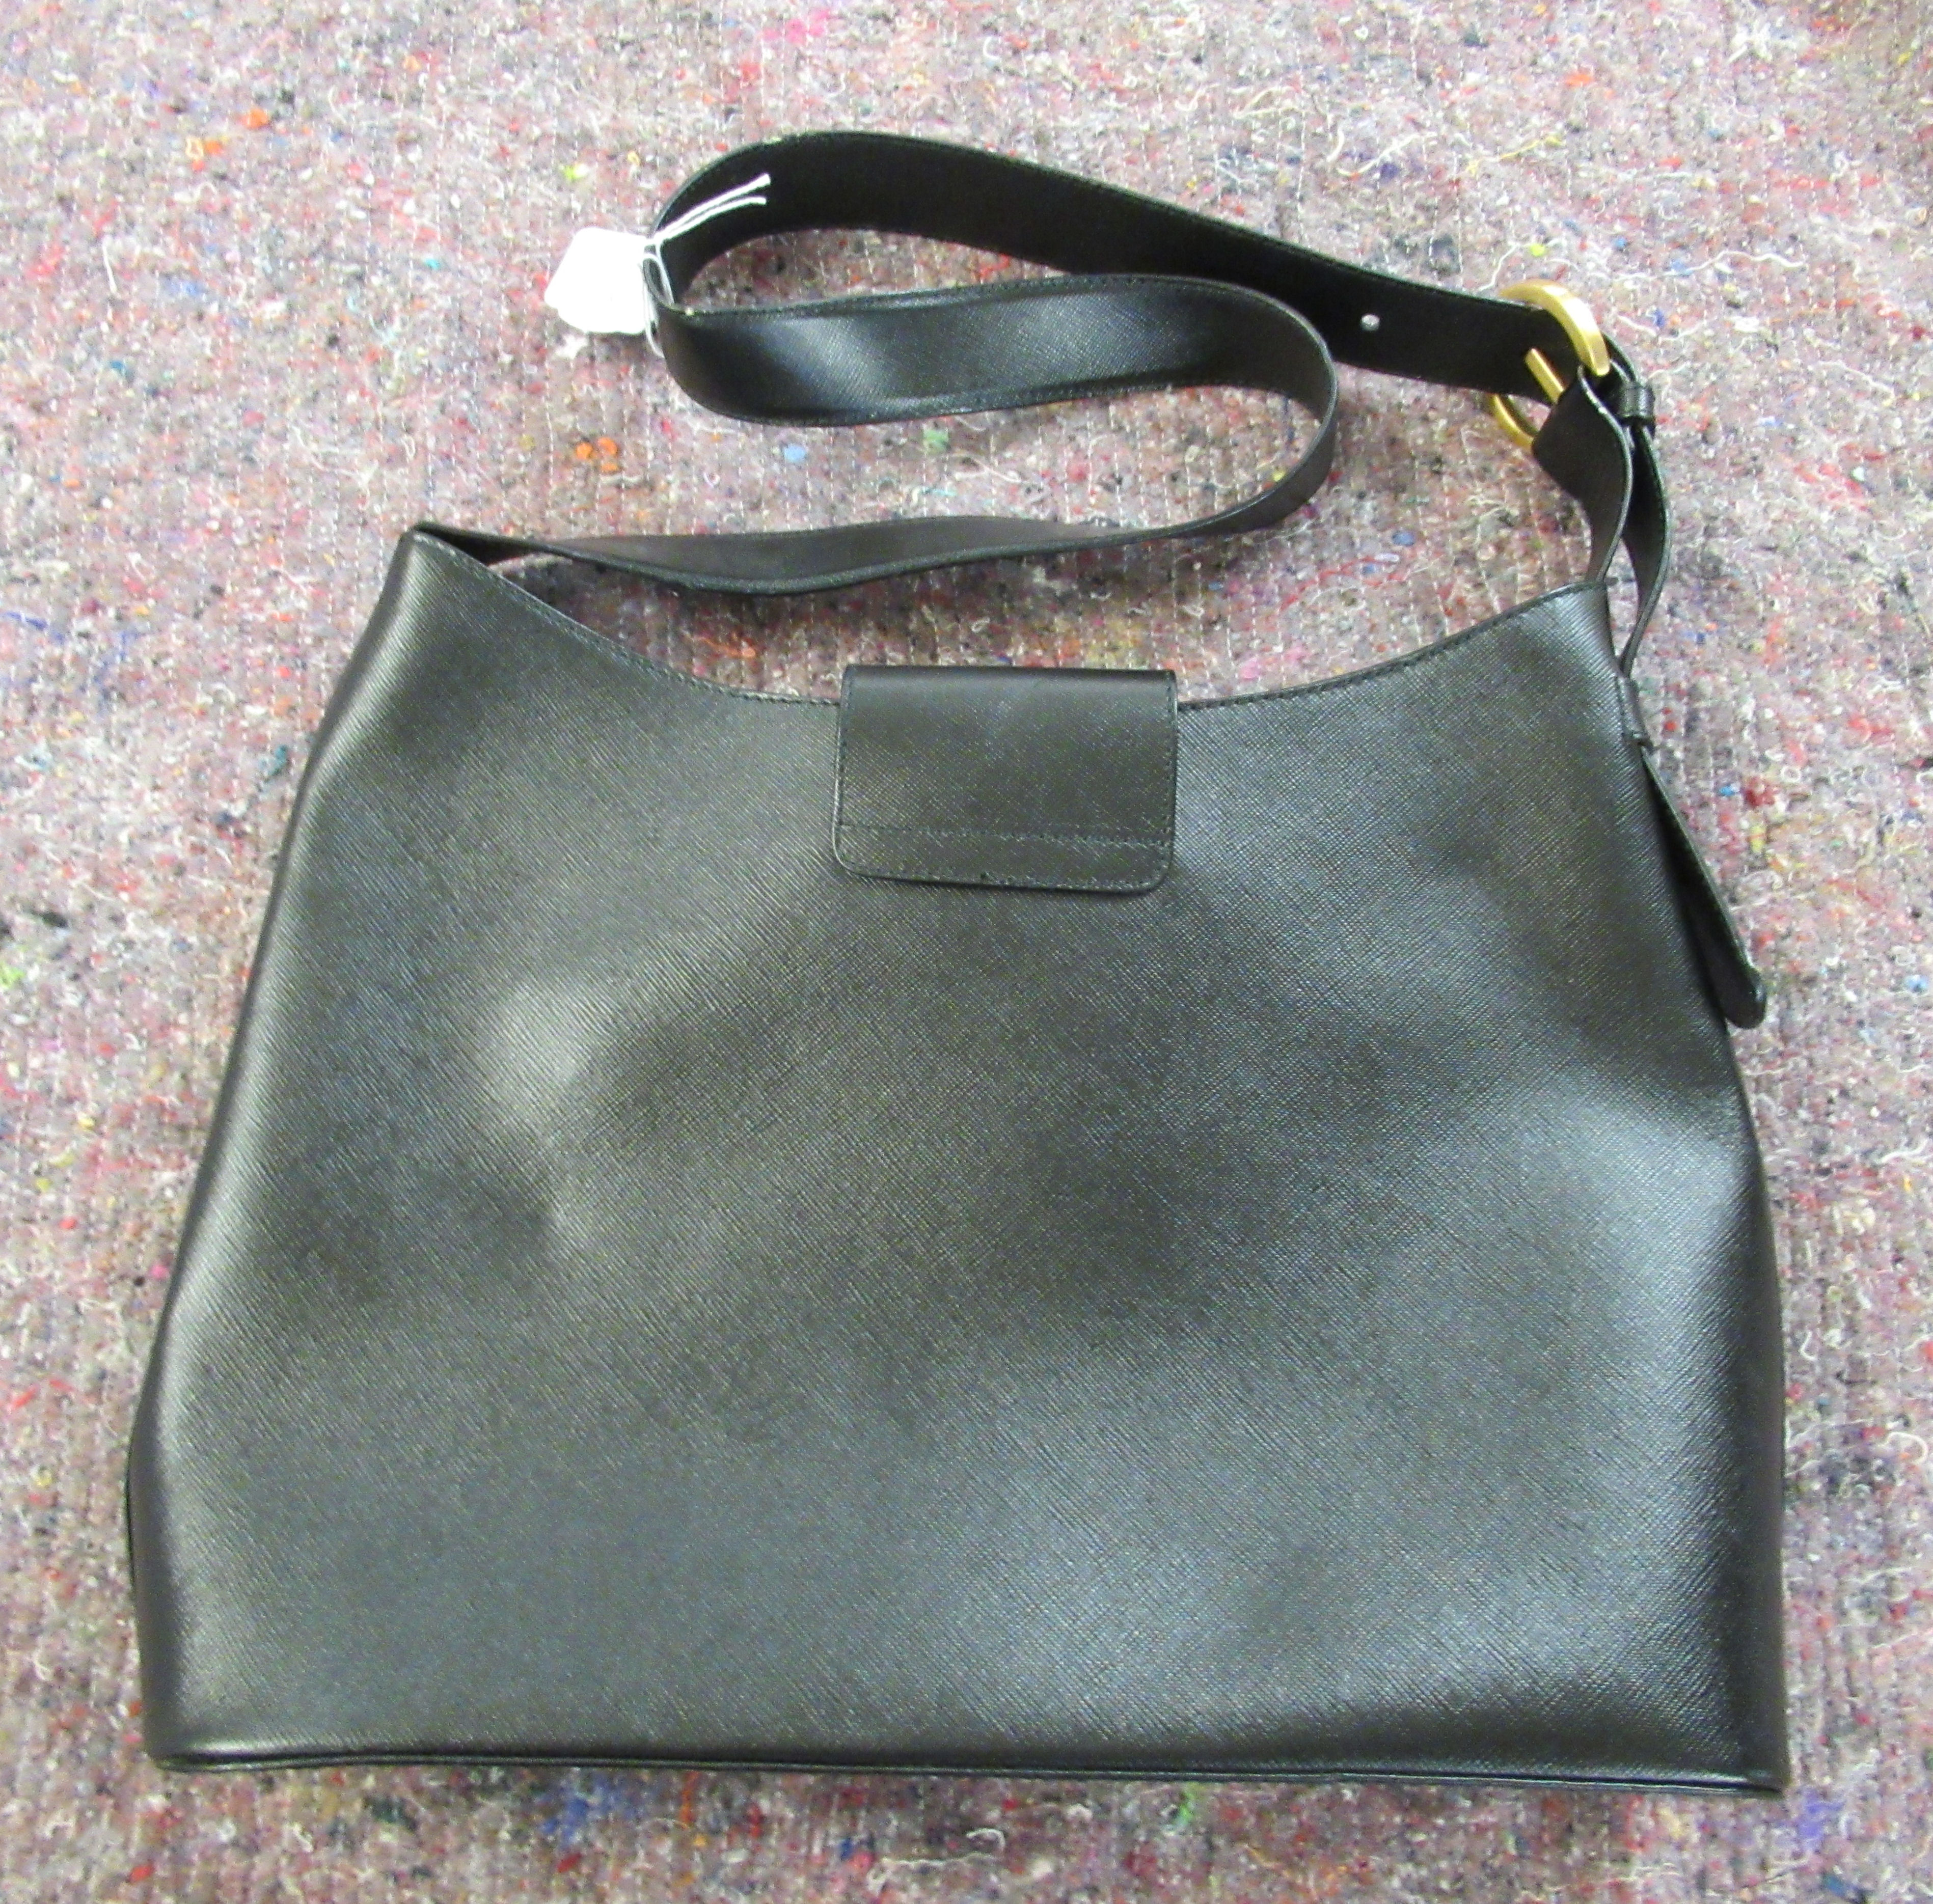 A Salvatore Ferragamo black leather tote bag OS6 - Image 2 of 3